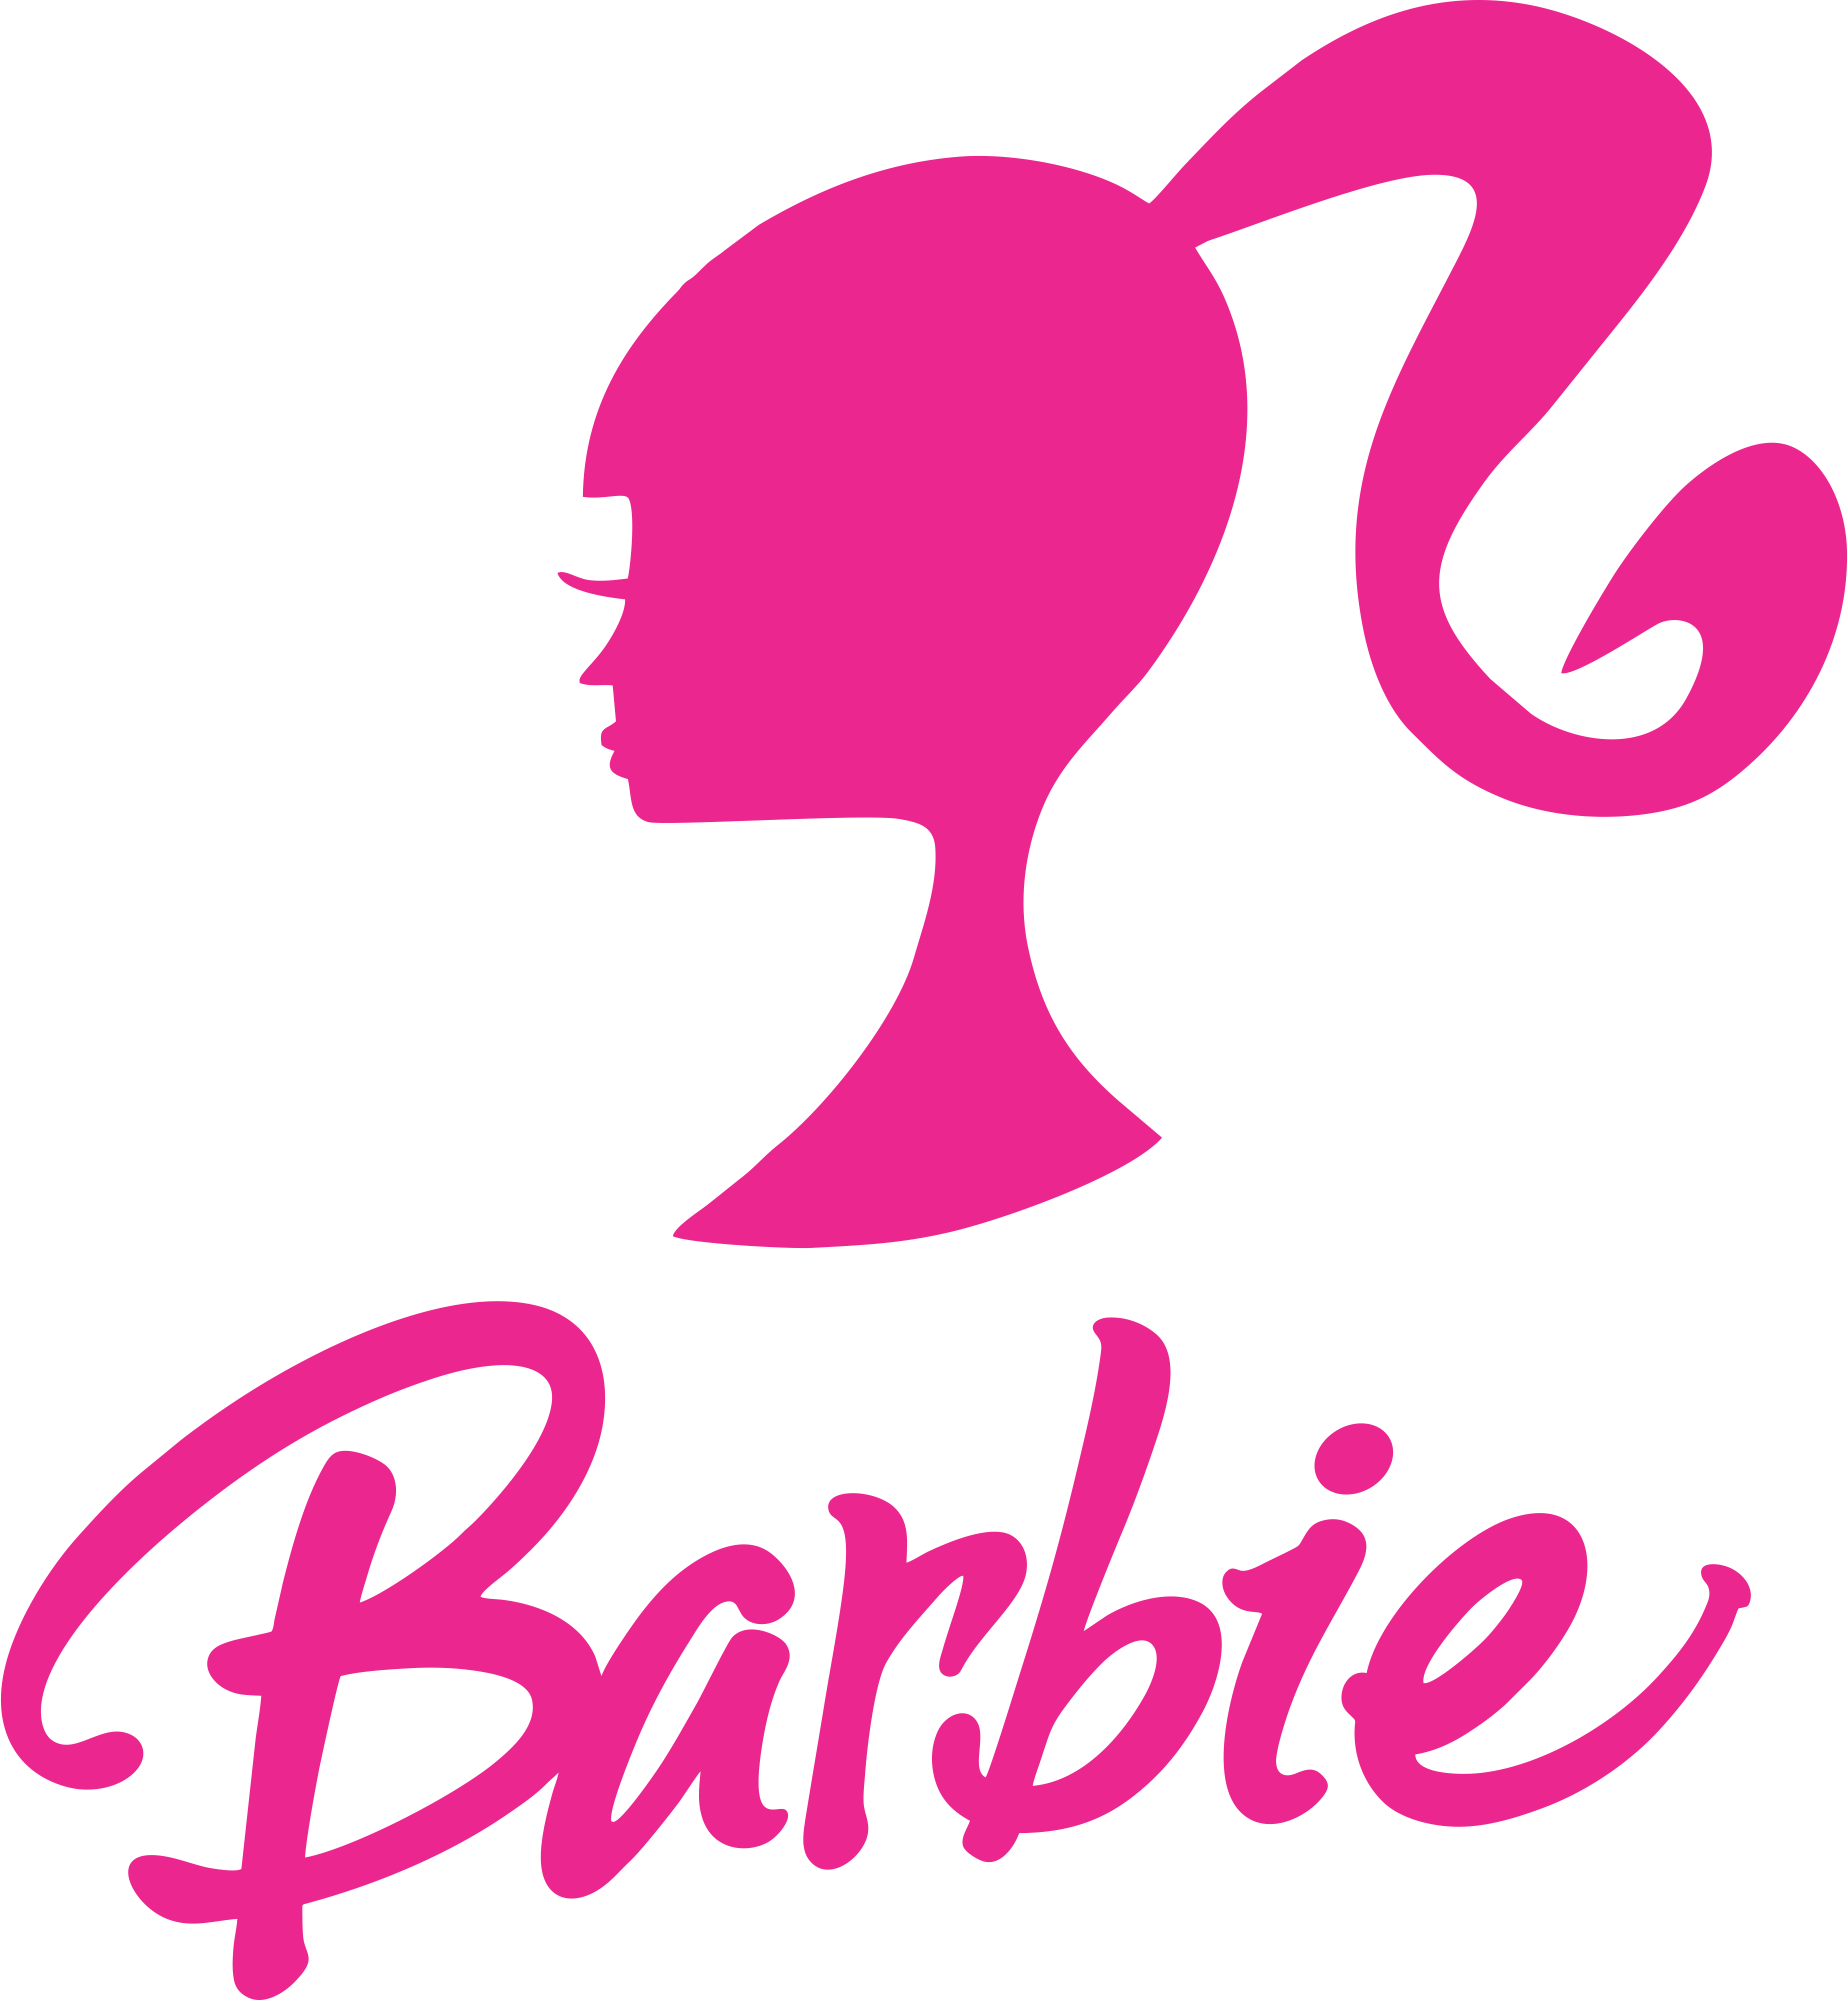 barbie-logo-png-05